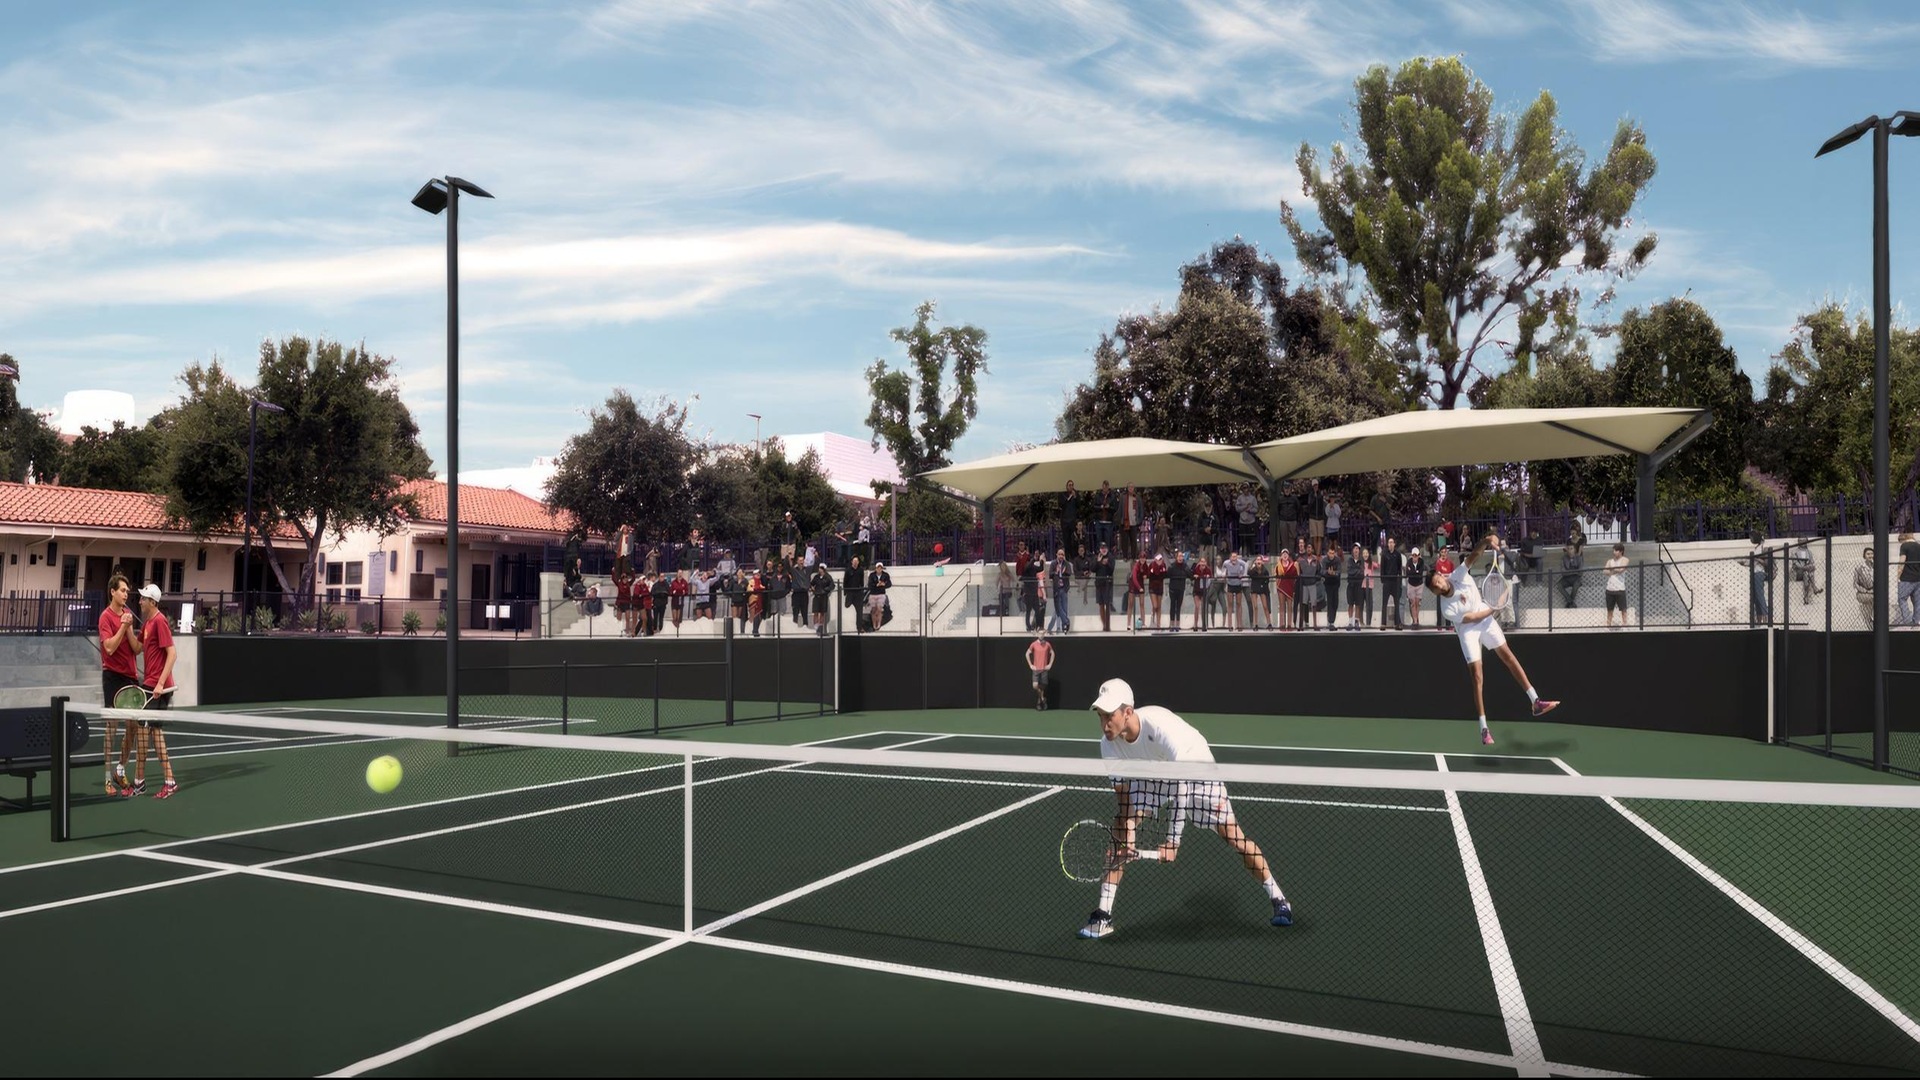 CMS Plans Biszantz Family Tennis Center Enhancements Ahead of Hosting Nationals in 2025